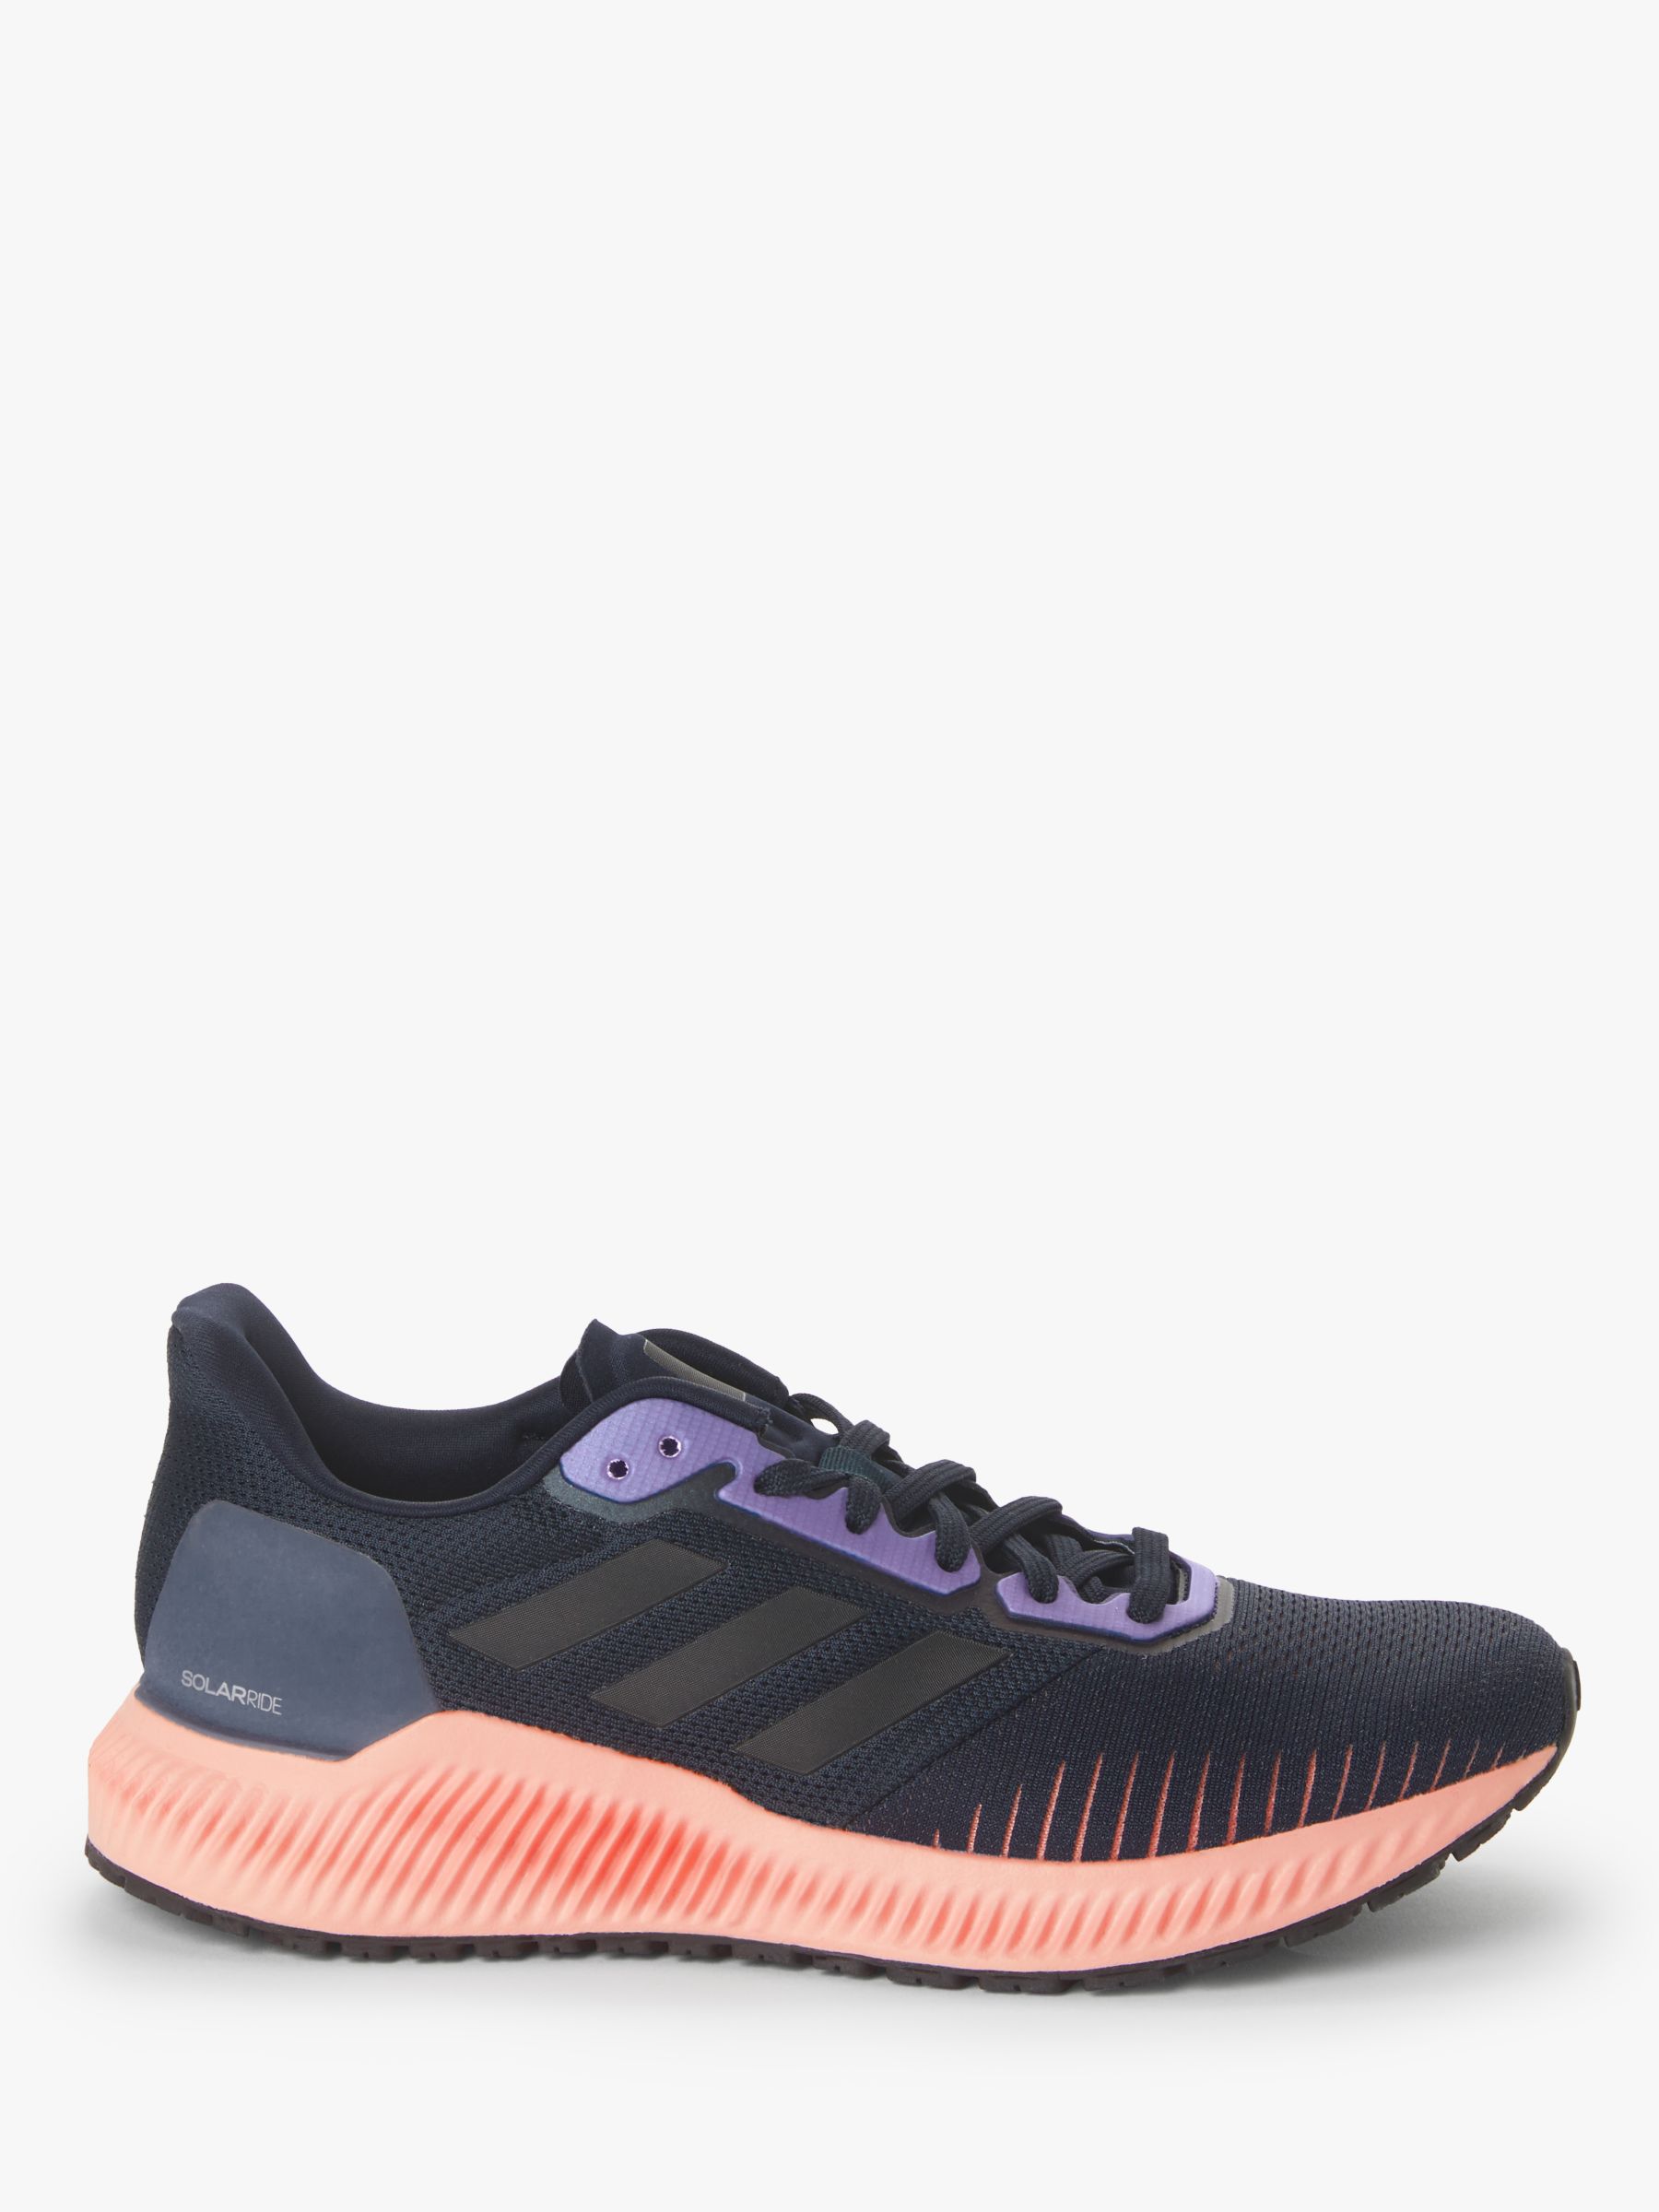 adidas solar ride women's running shoes